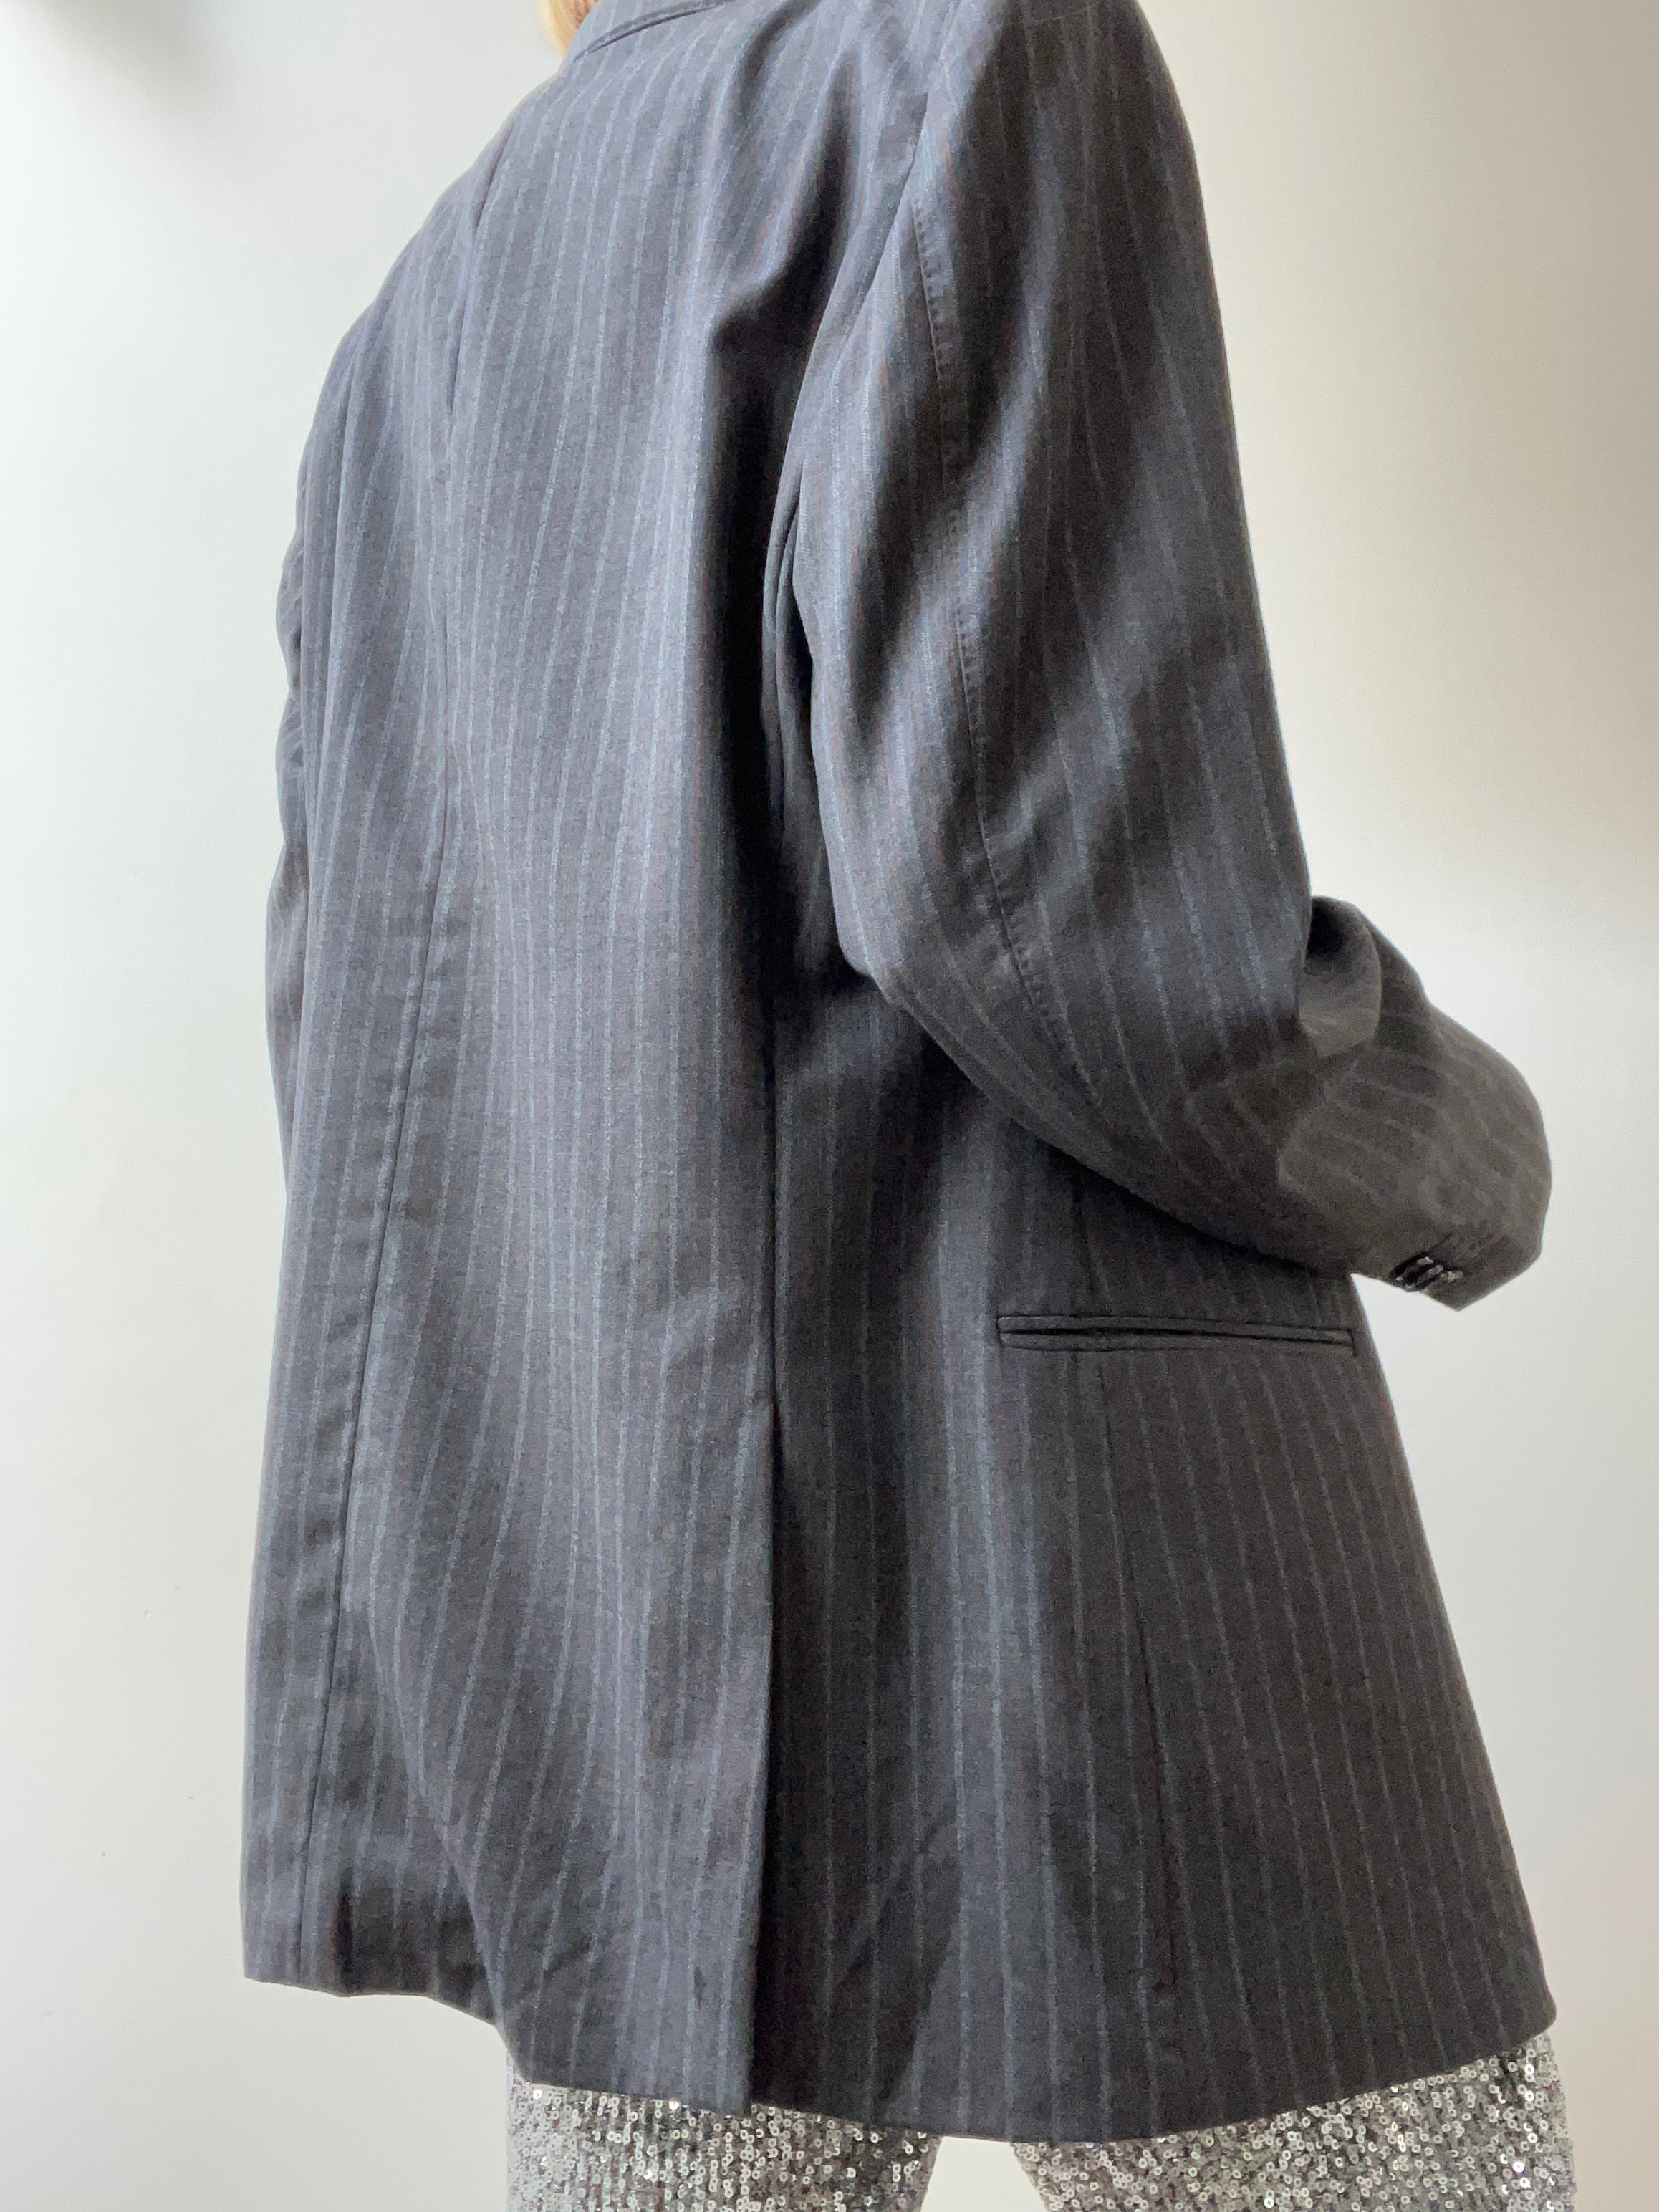 Armani Jackets Large - XLarge Charcoal with Chocolate Pinstripe Blazer